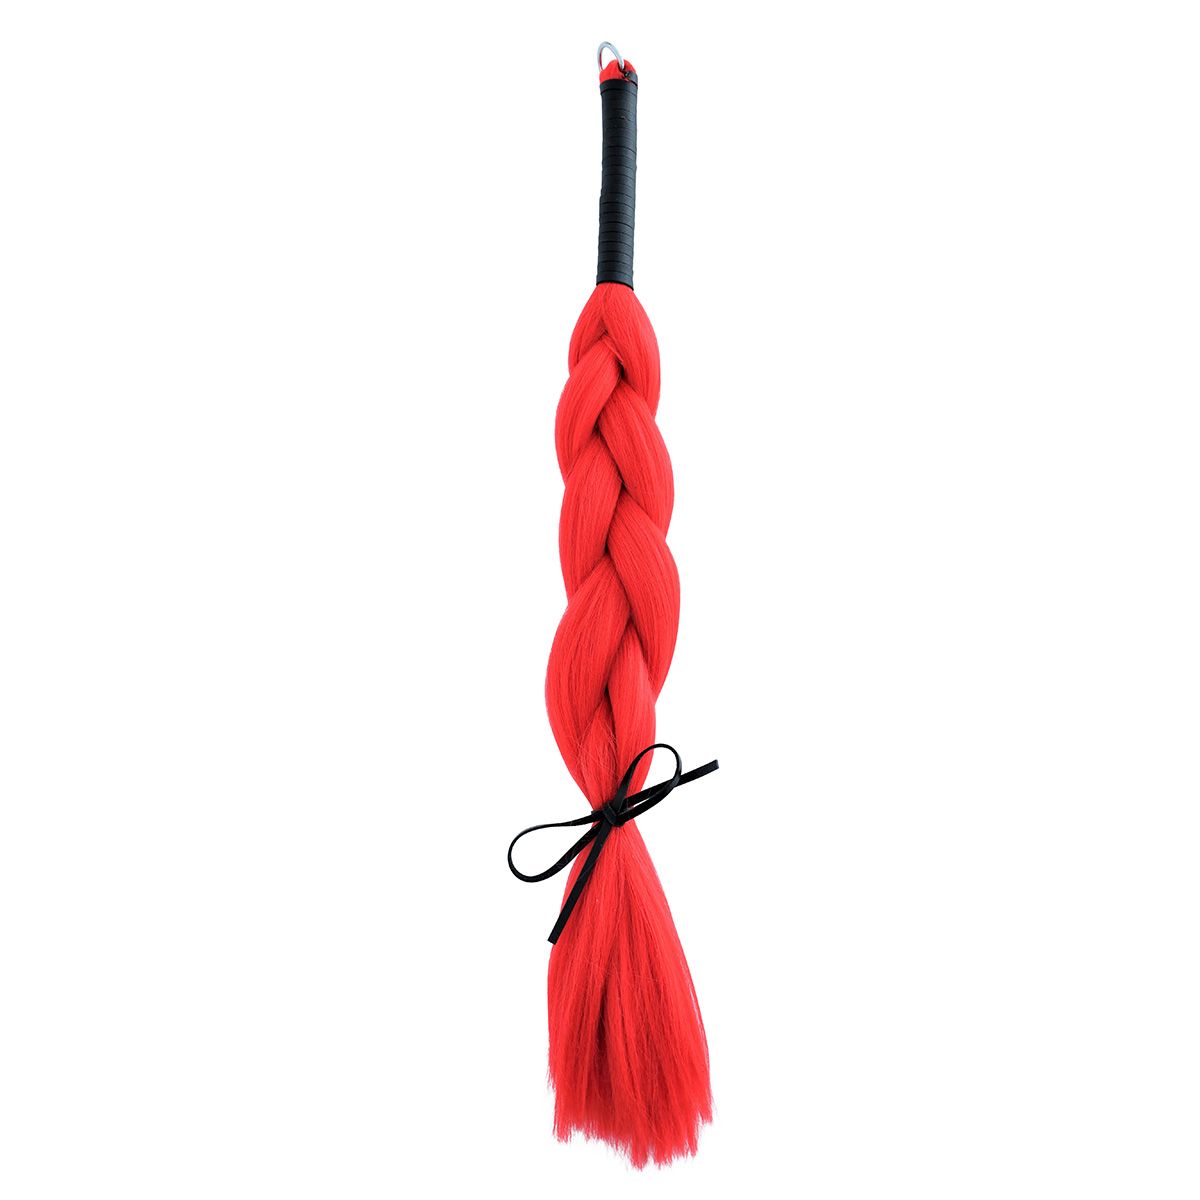 Vegan artificial hair whip/flogger Red